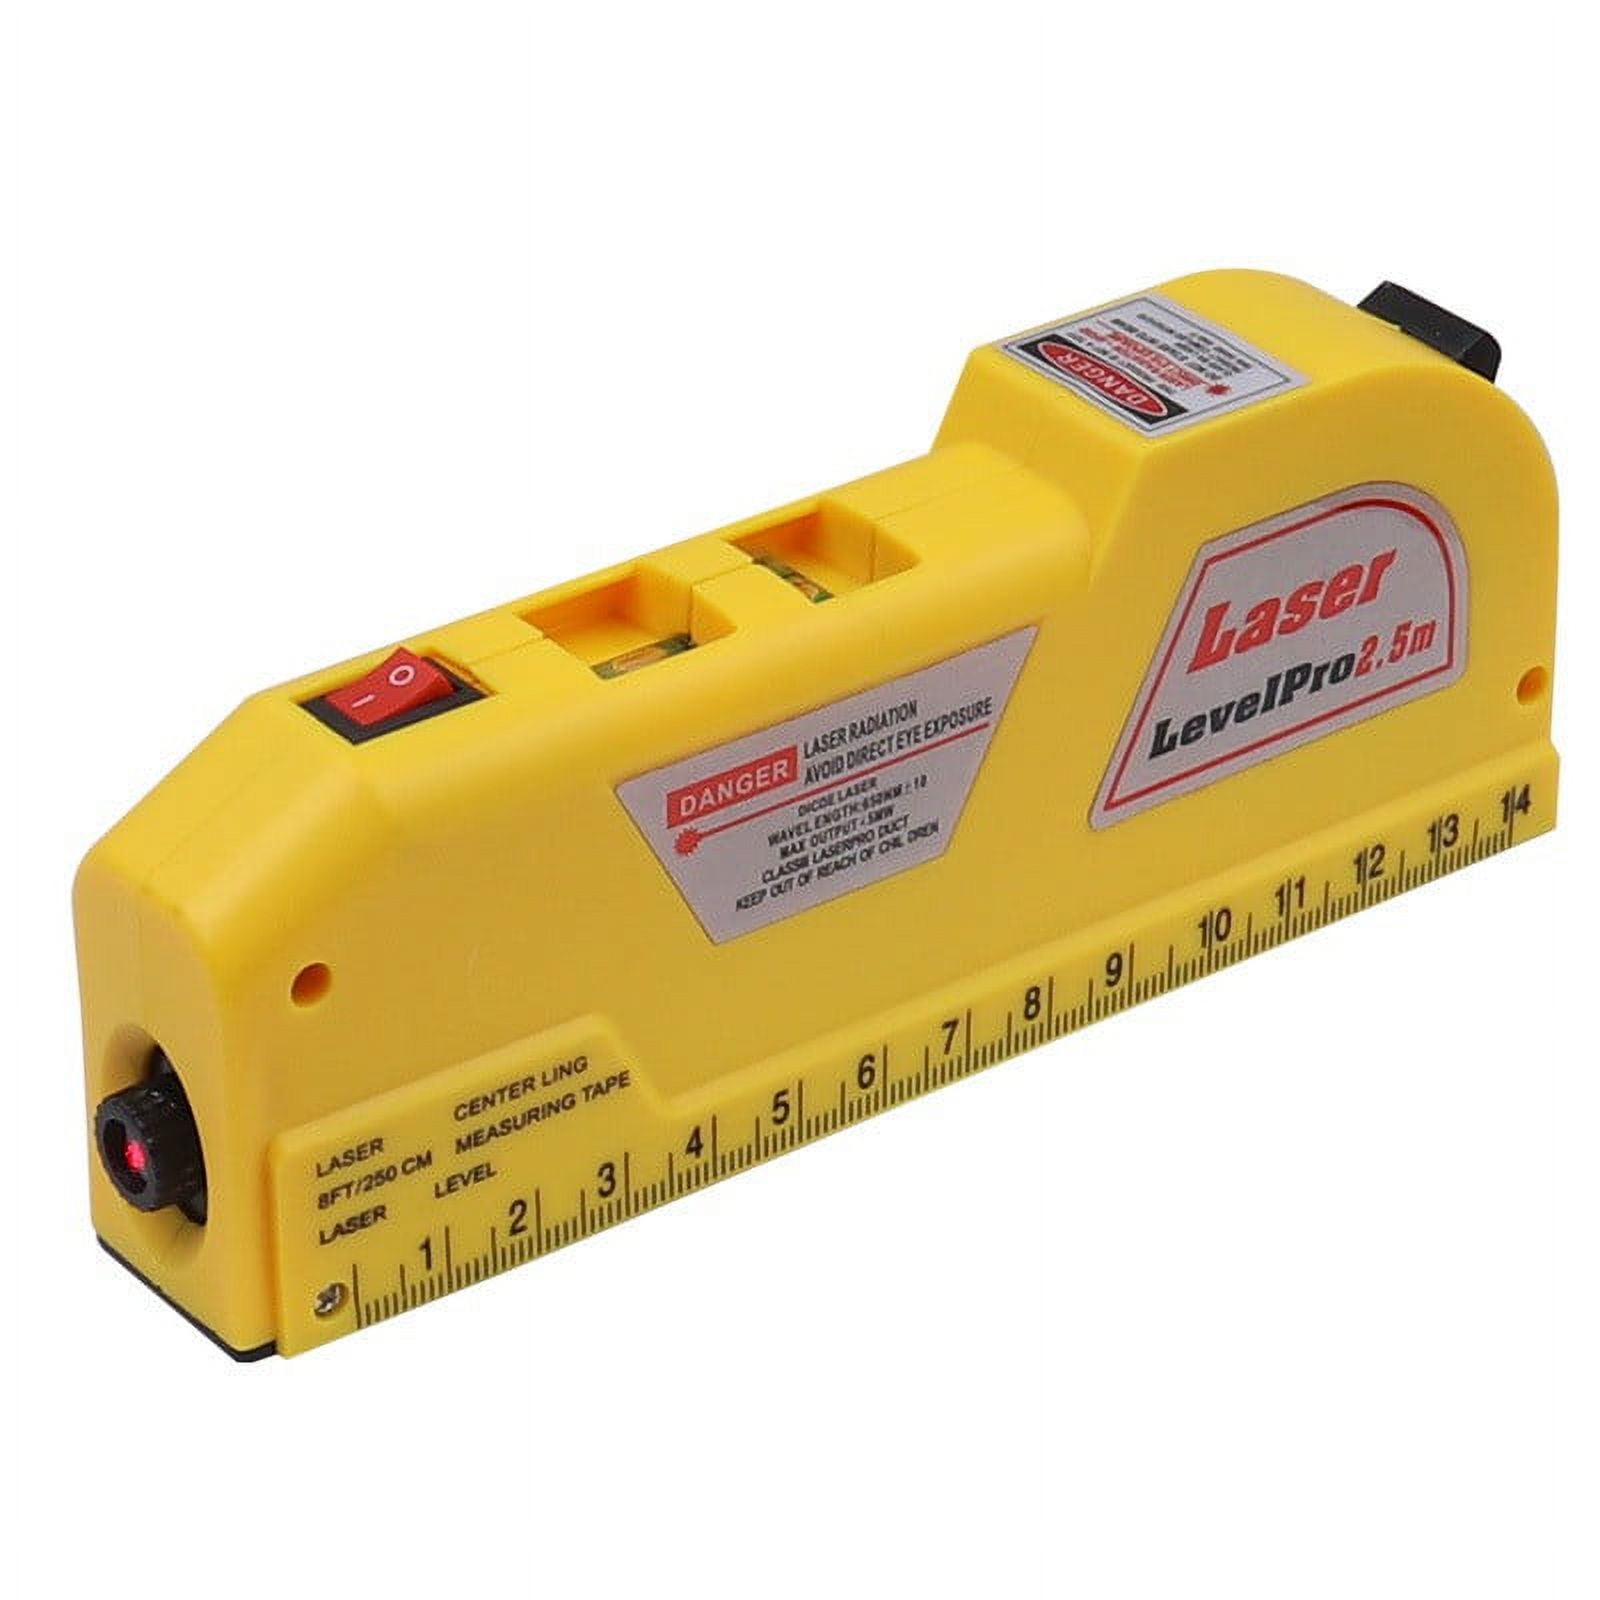 Smart Digital Laser Tape Measure 100ft/30m Smart Tape Measure